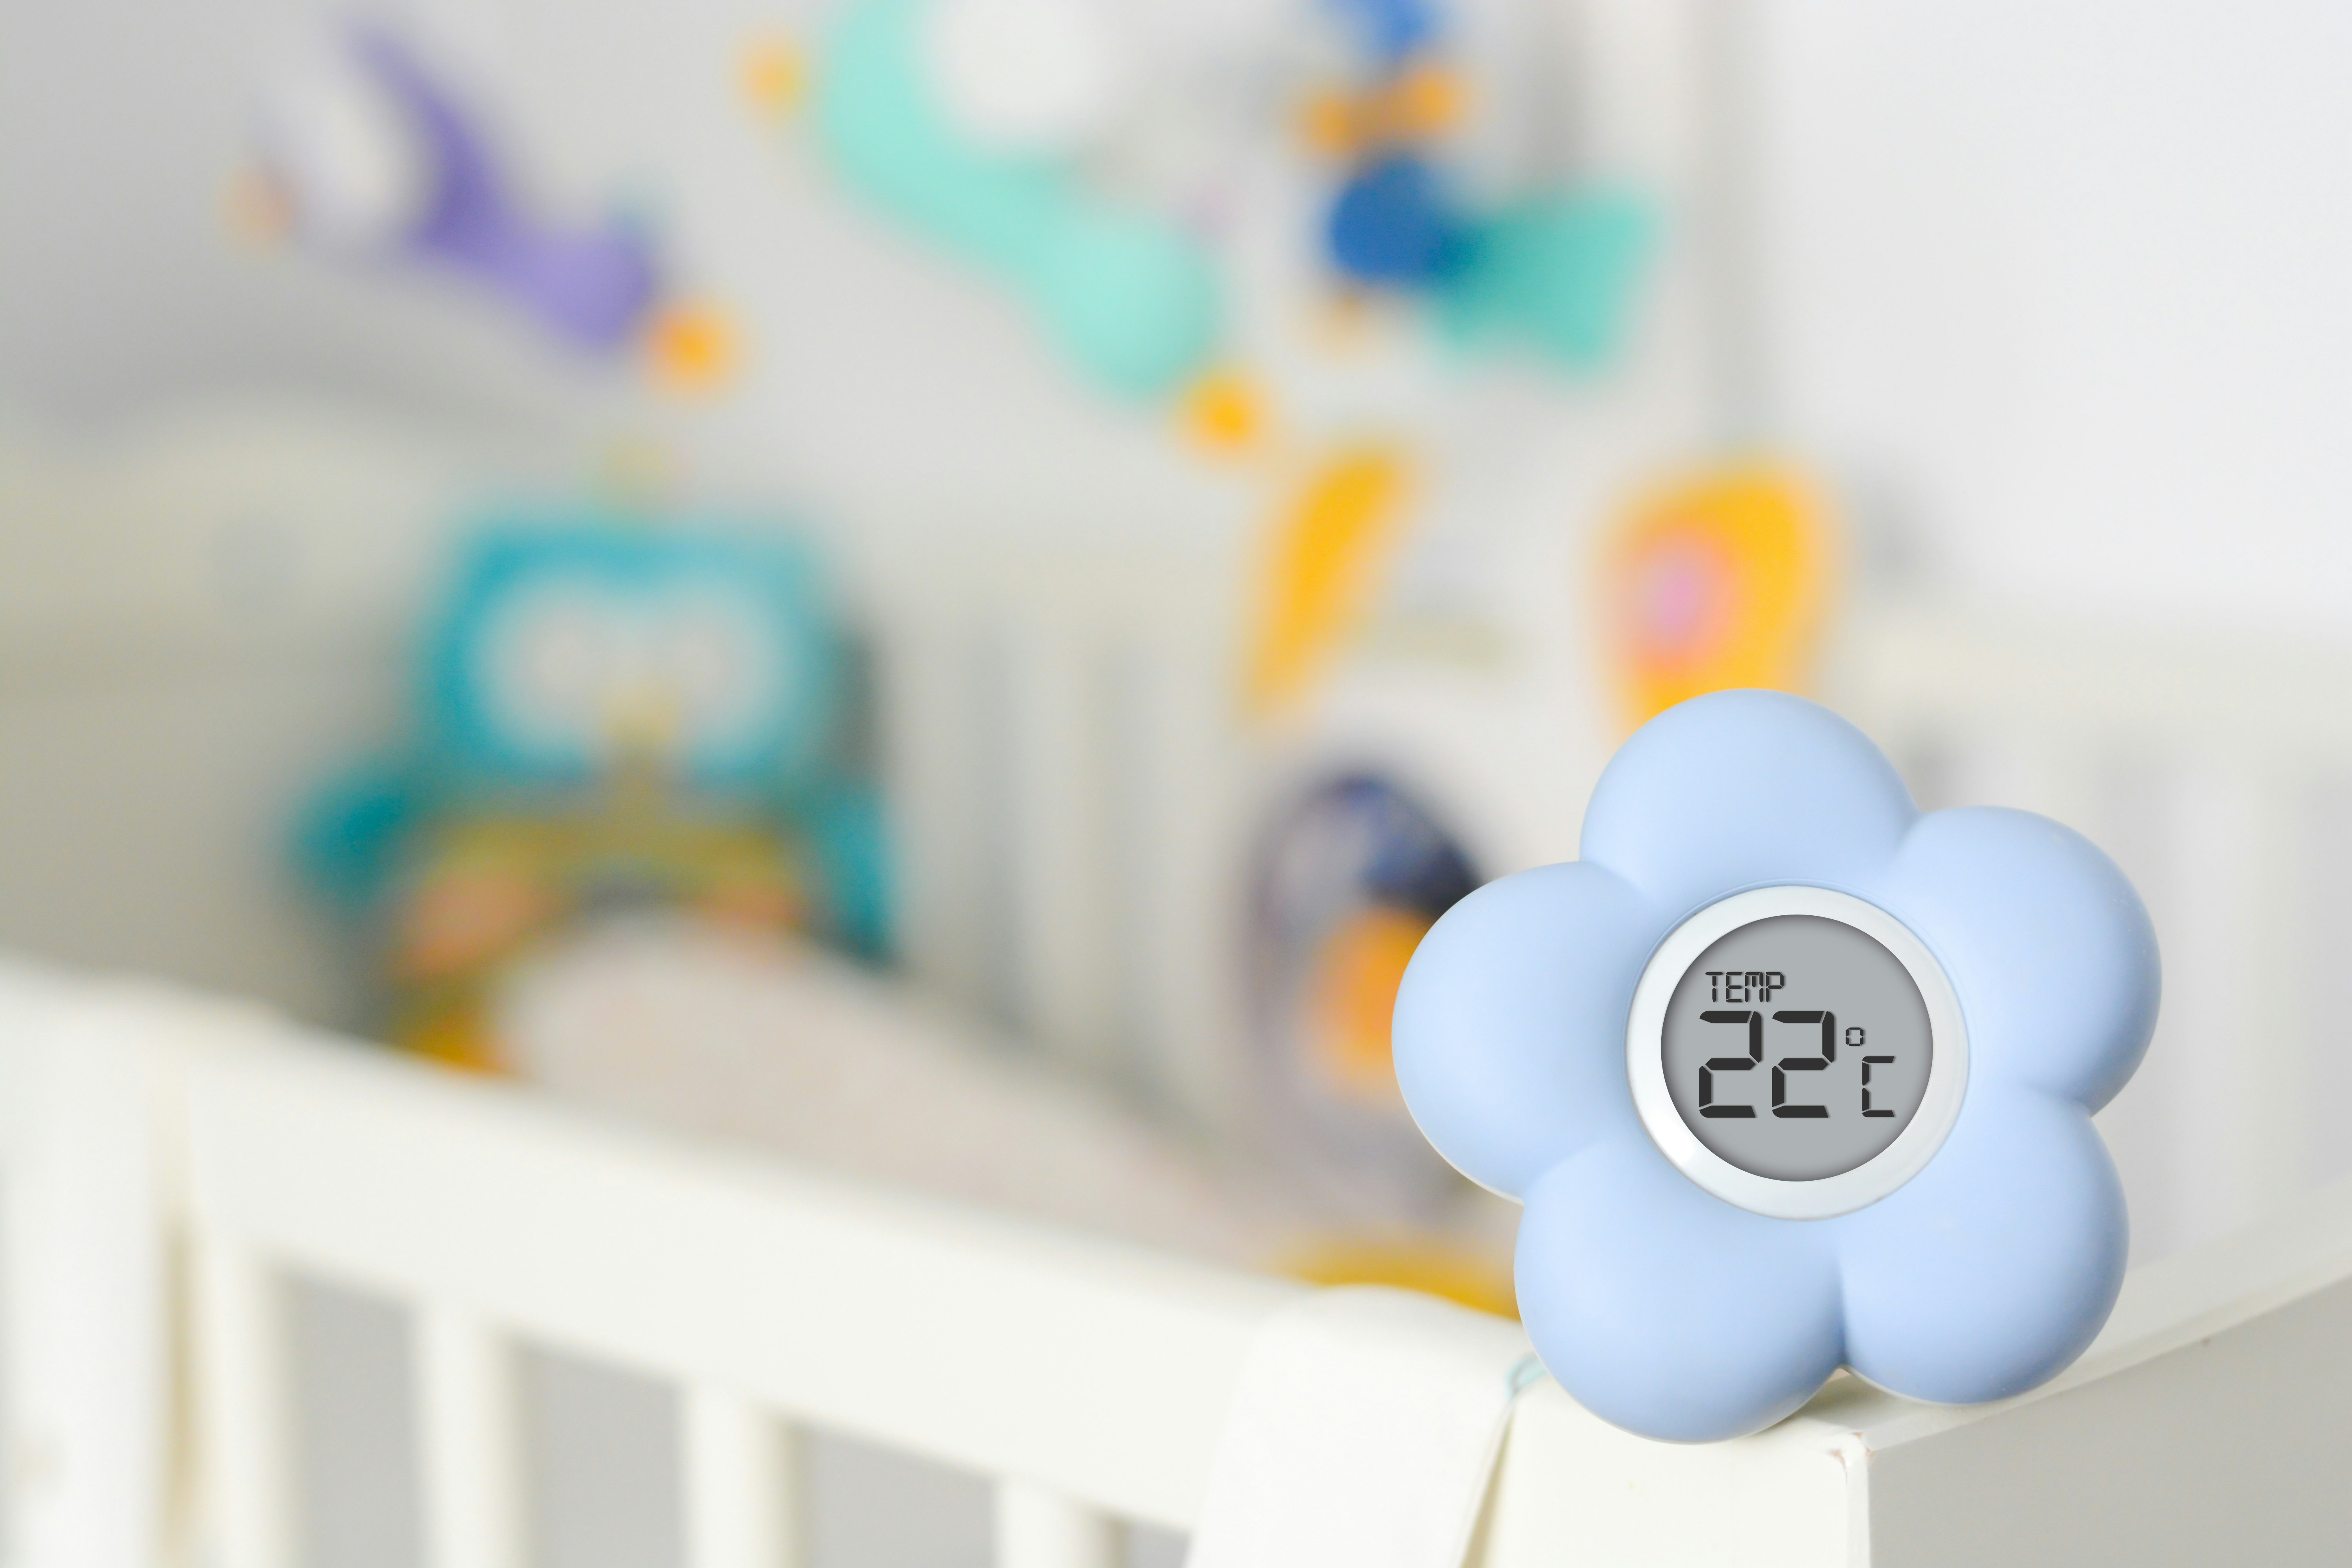 Clippasafe Nursery Room Thermometer